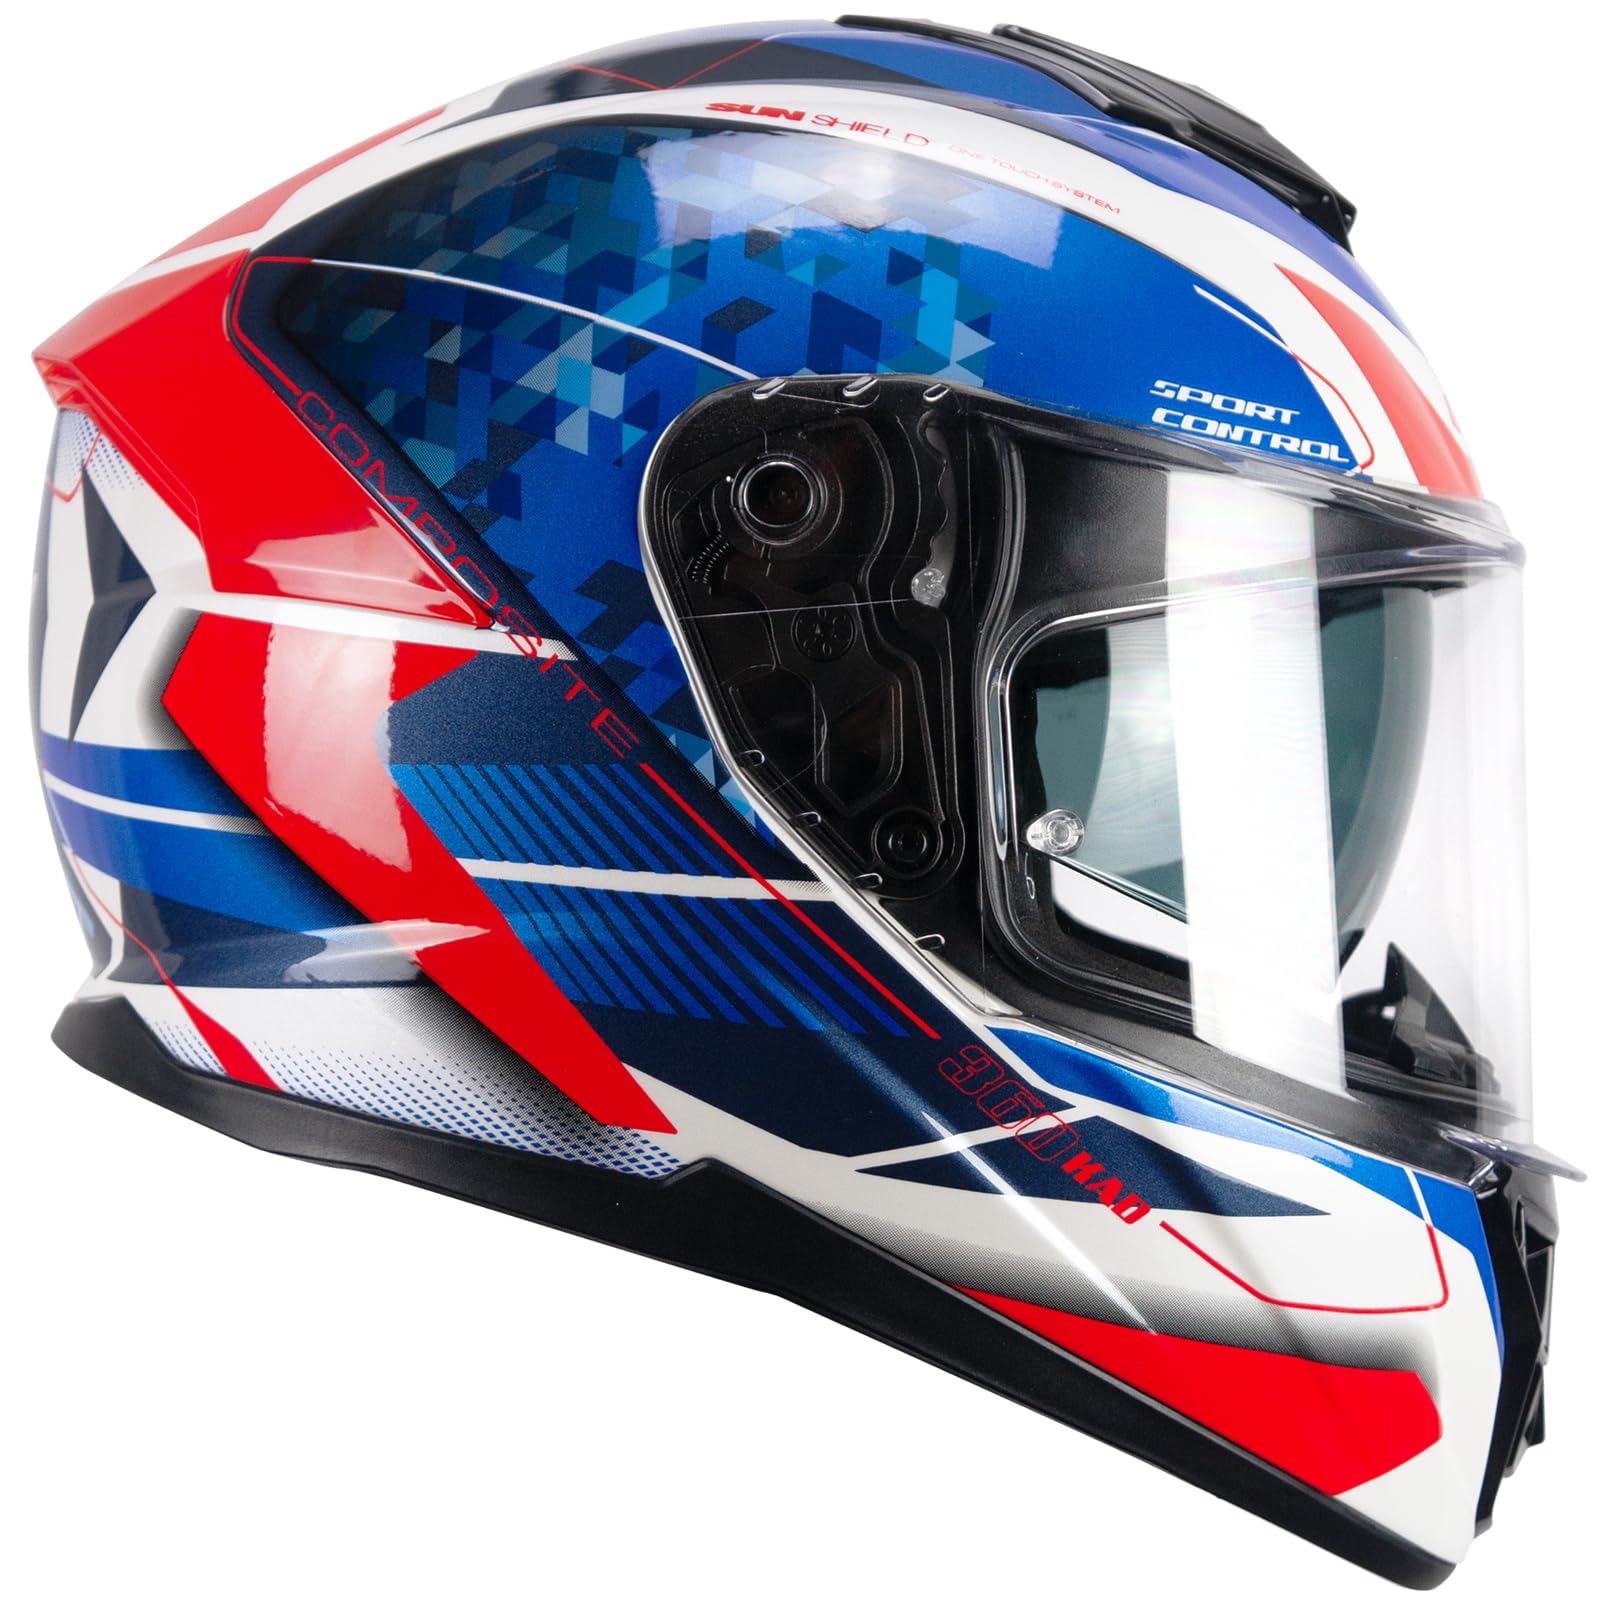 CGM Helm Full Face 360S Kad Race Blau Rot, L (59-60 cm) von CGM